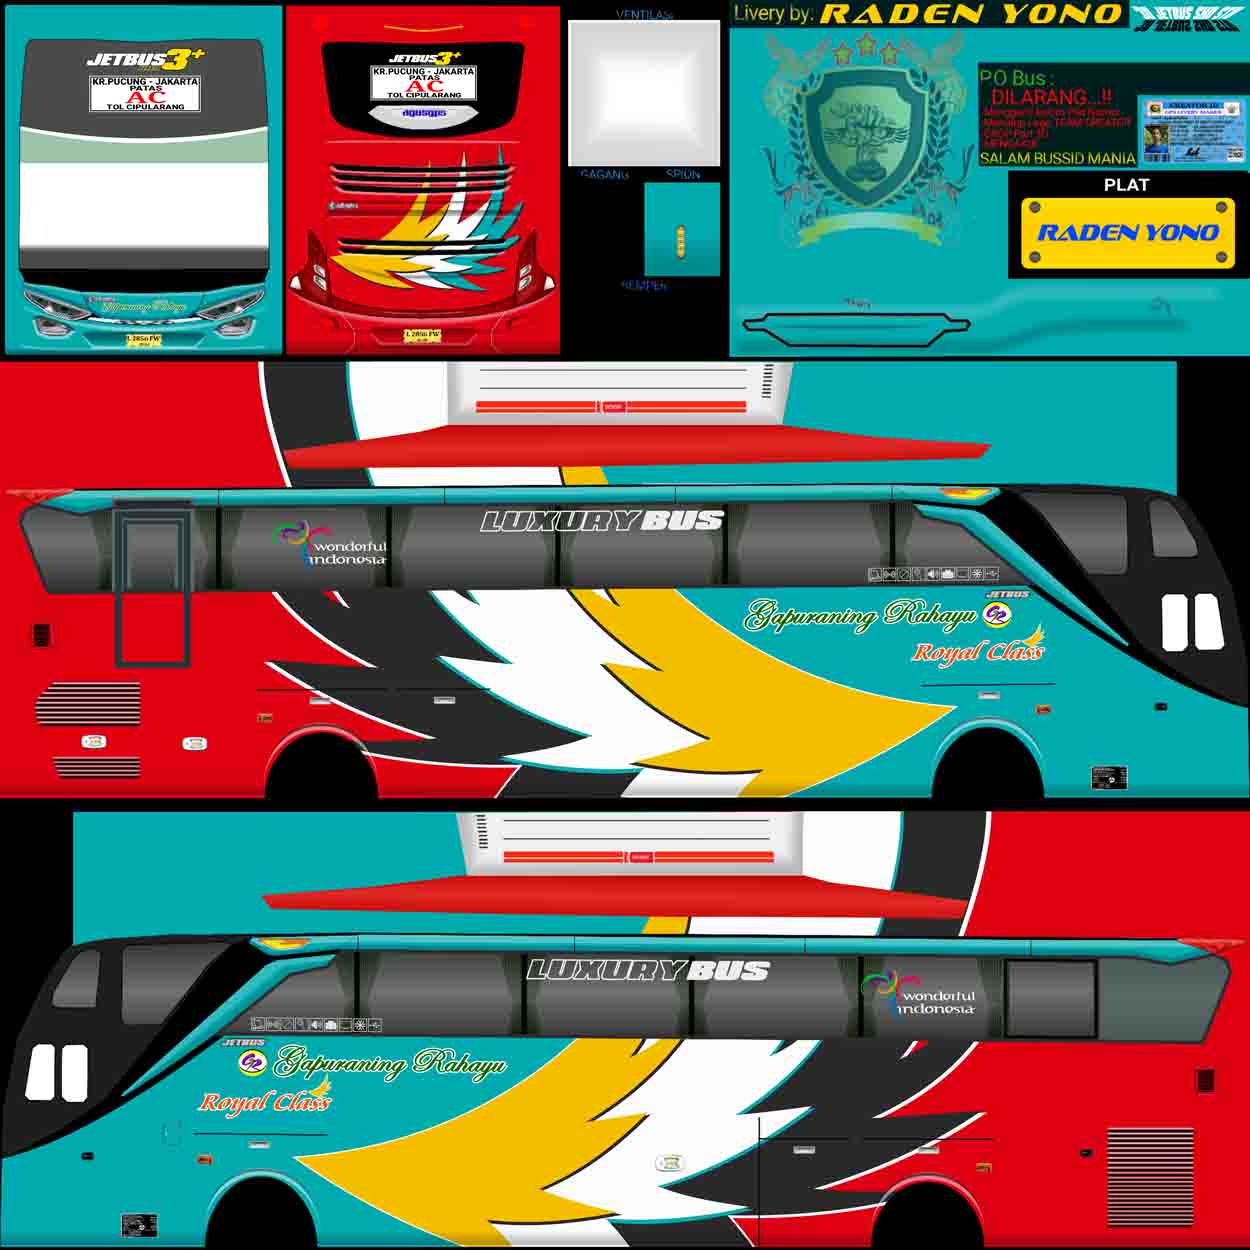 livery bus gapuraning rahayu shd